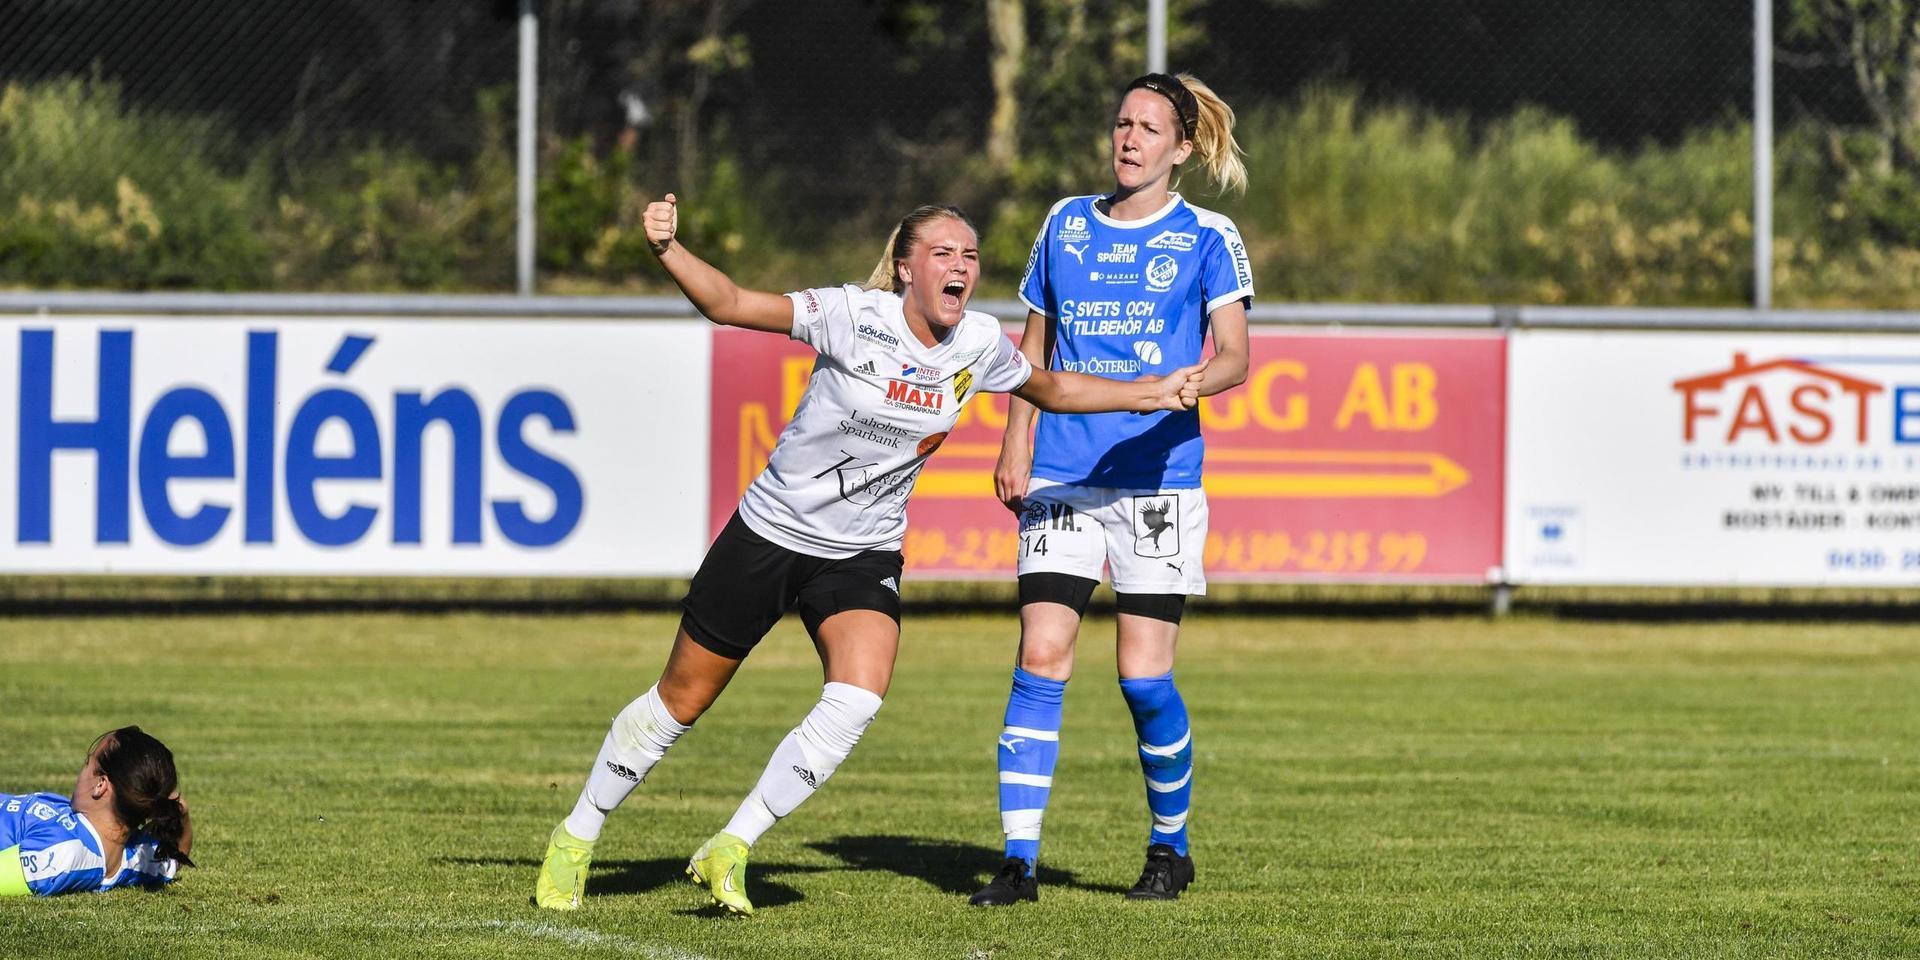 Laholms FK:s skyttedrottning Ida Axeldal fortsätter visa fin målform.